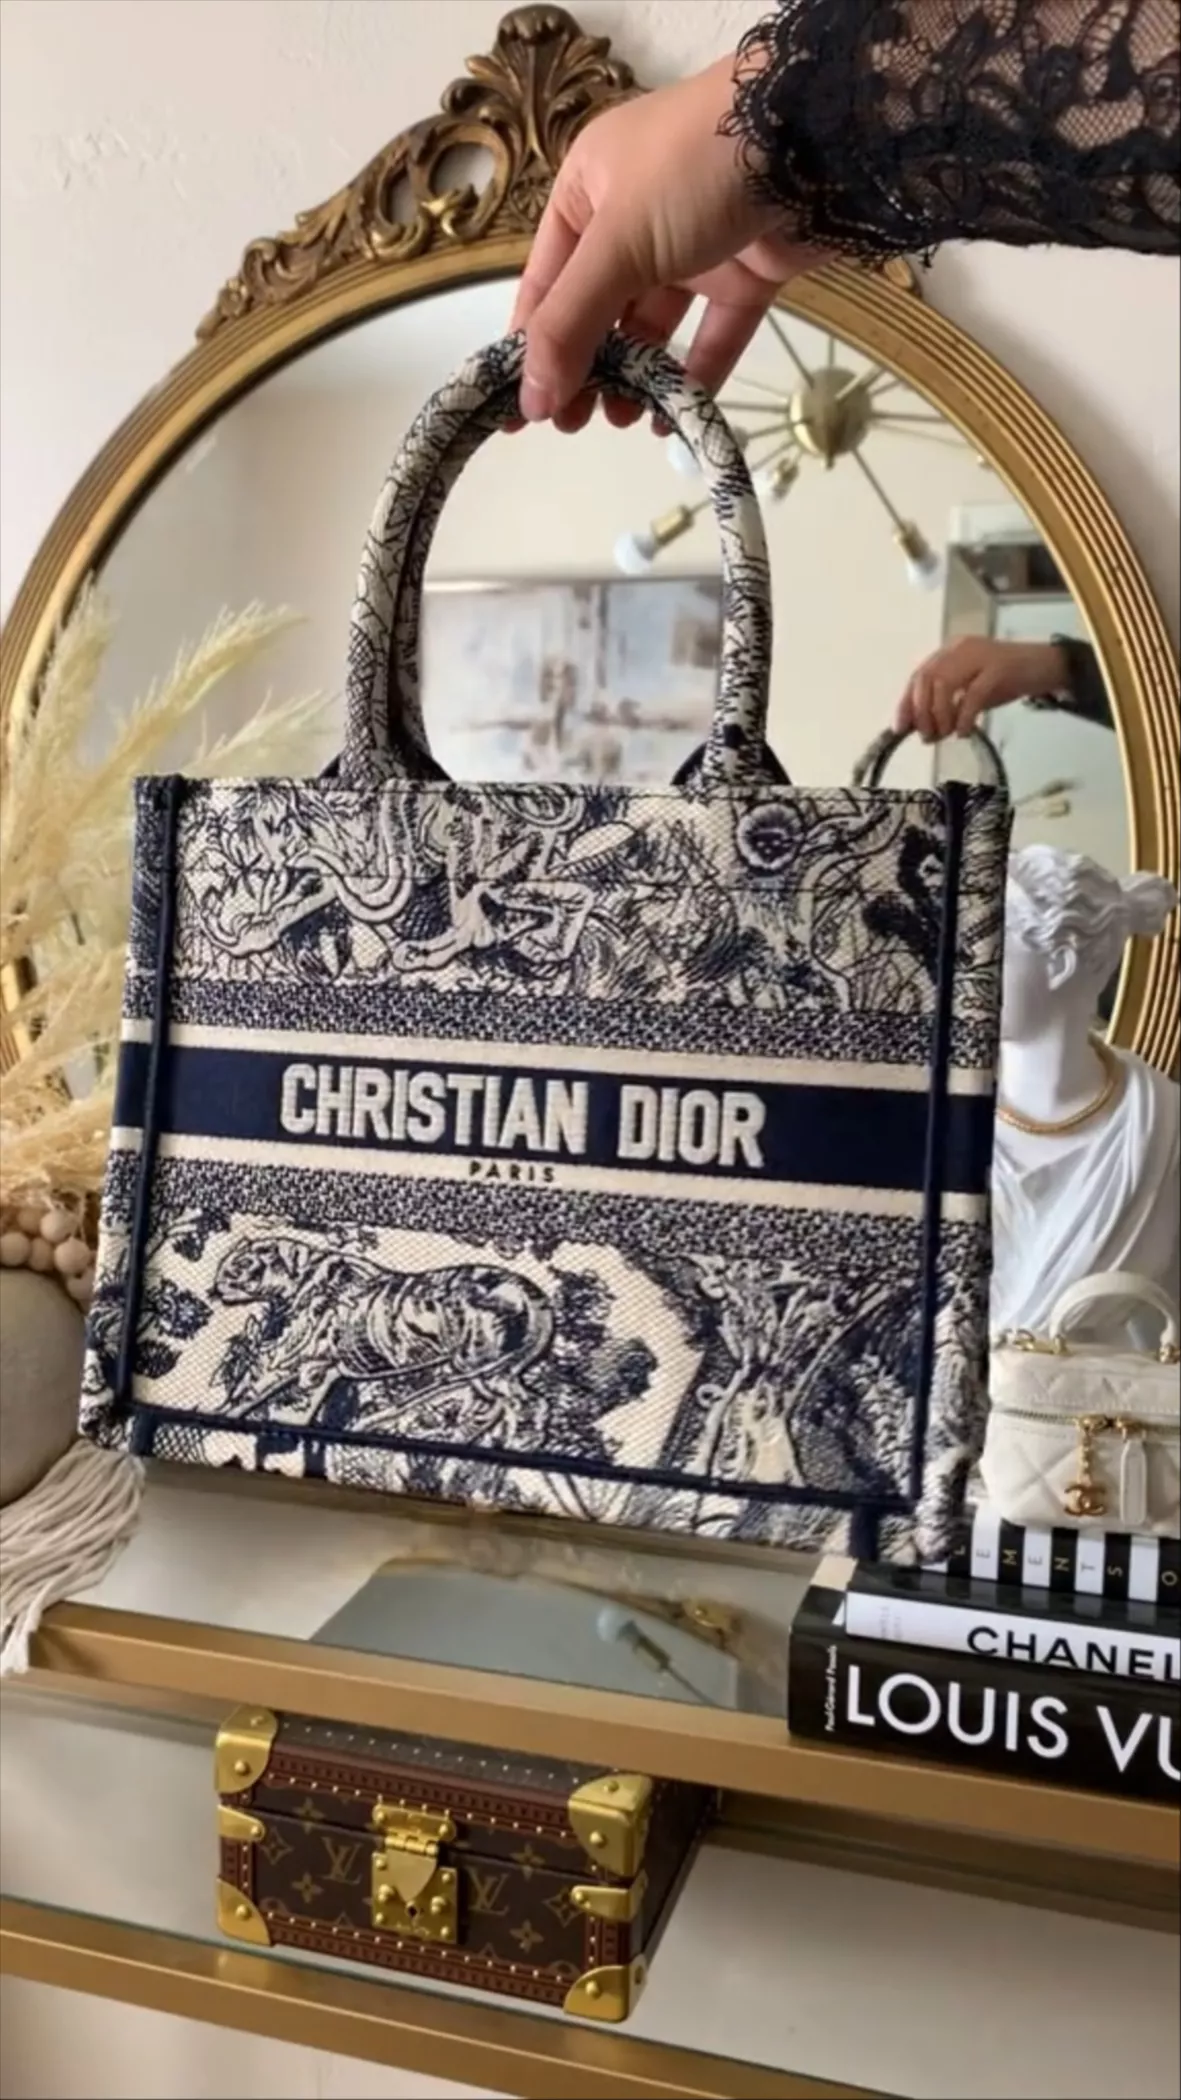 W2C Woman's Christian Dior bag : r/DHgate